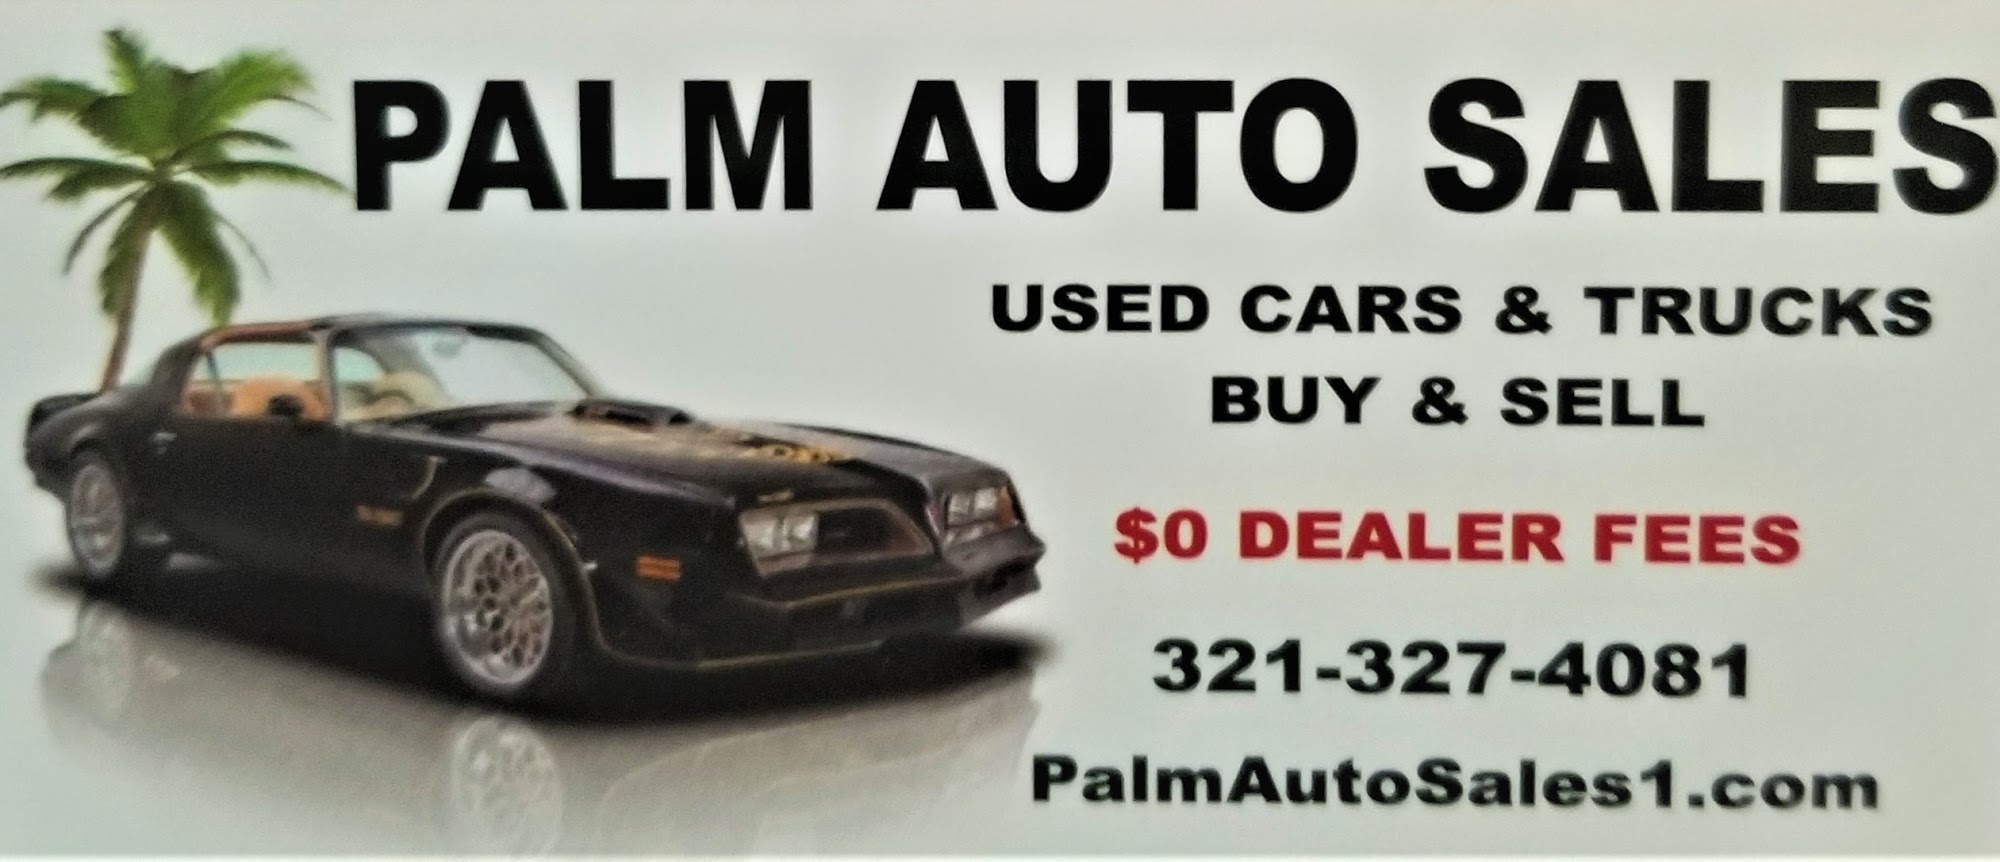 Palm Auto Sales